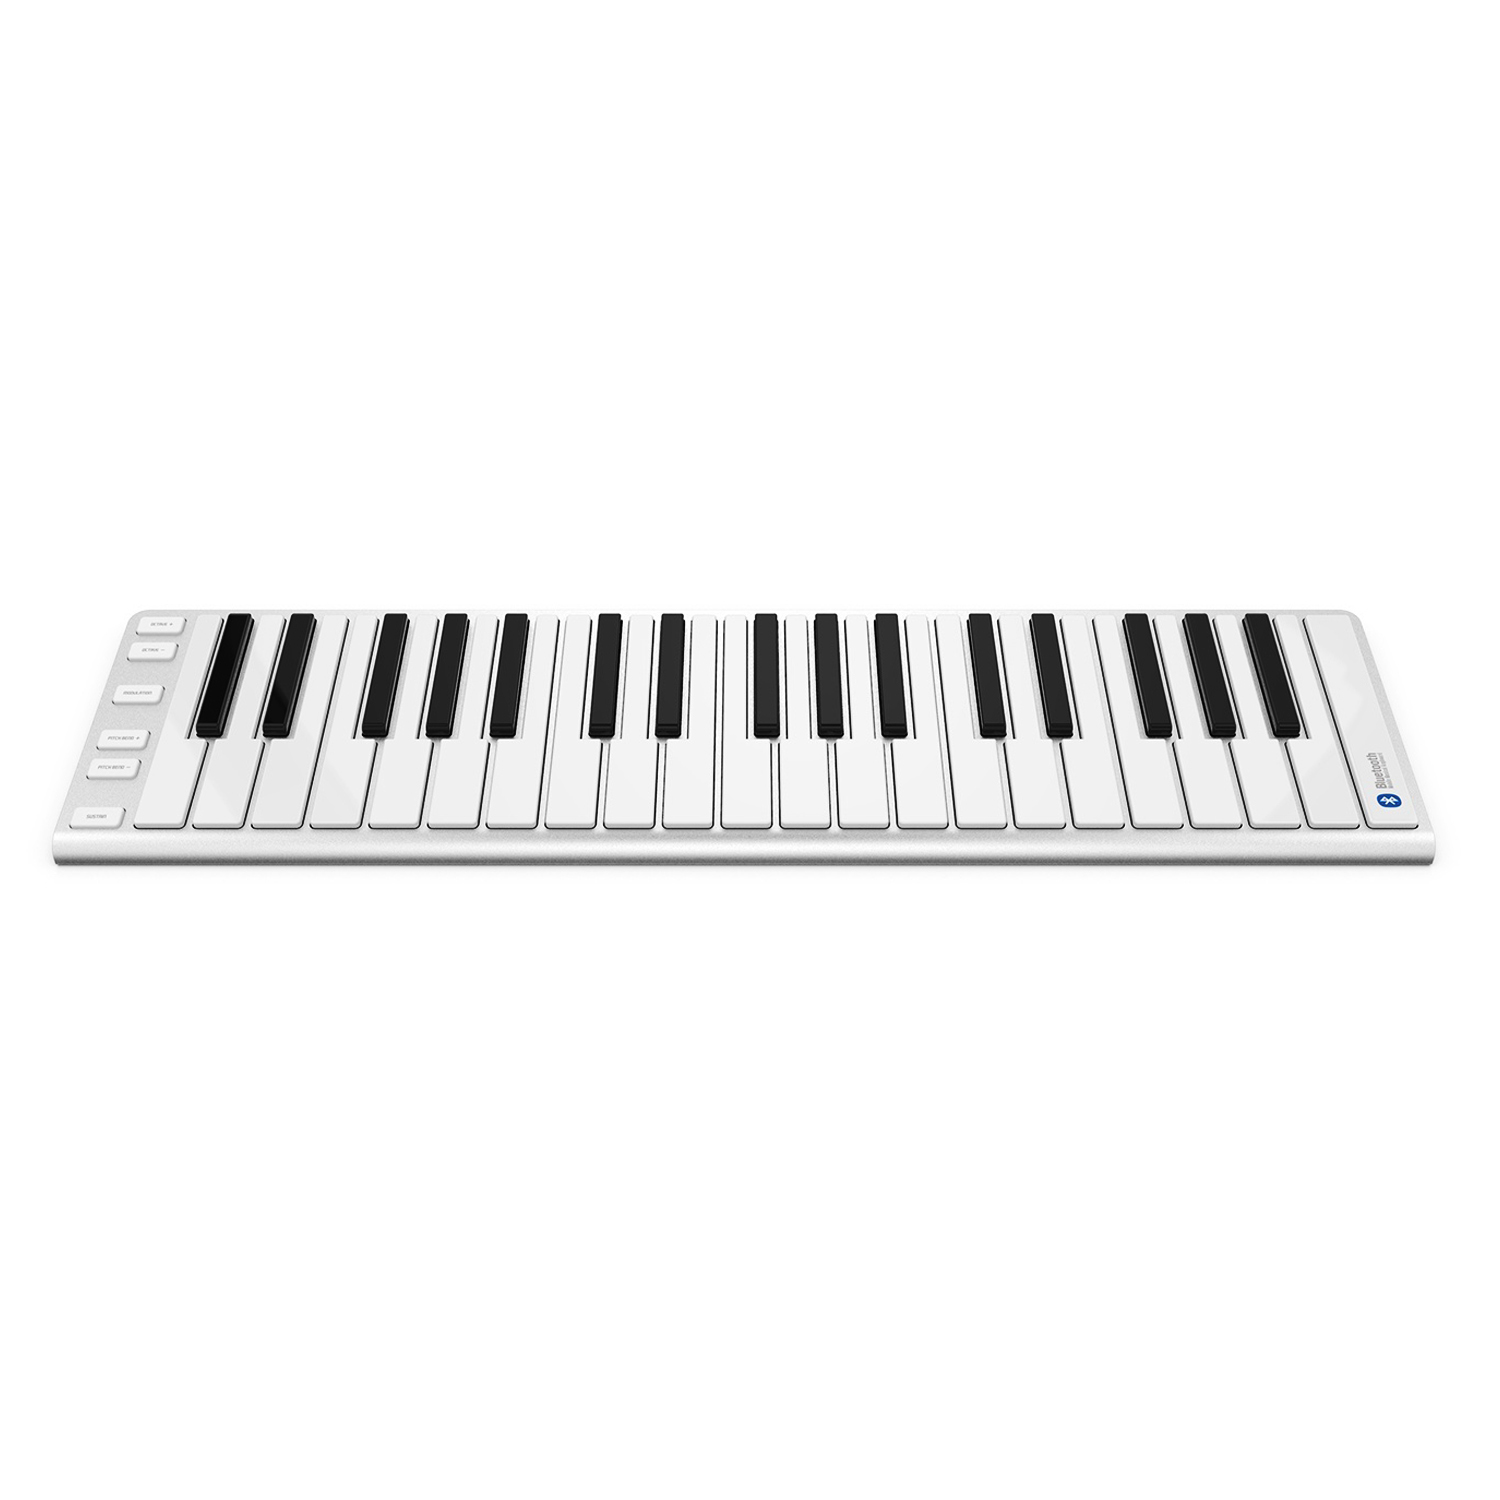 MIDI клавиатуры Artesia Xkey 37 LE контроллер lilypad arduino совместимый